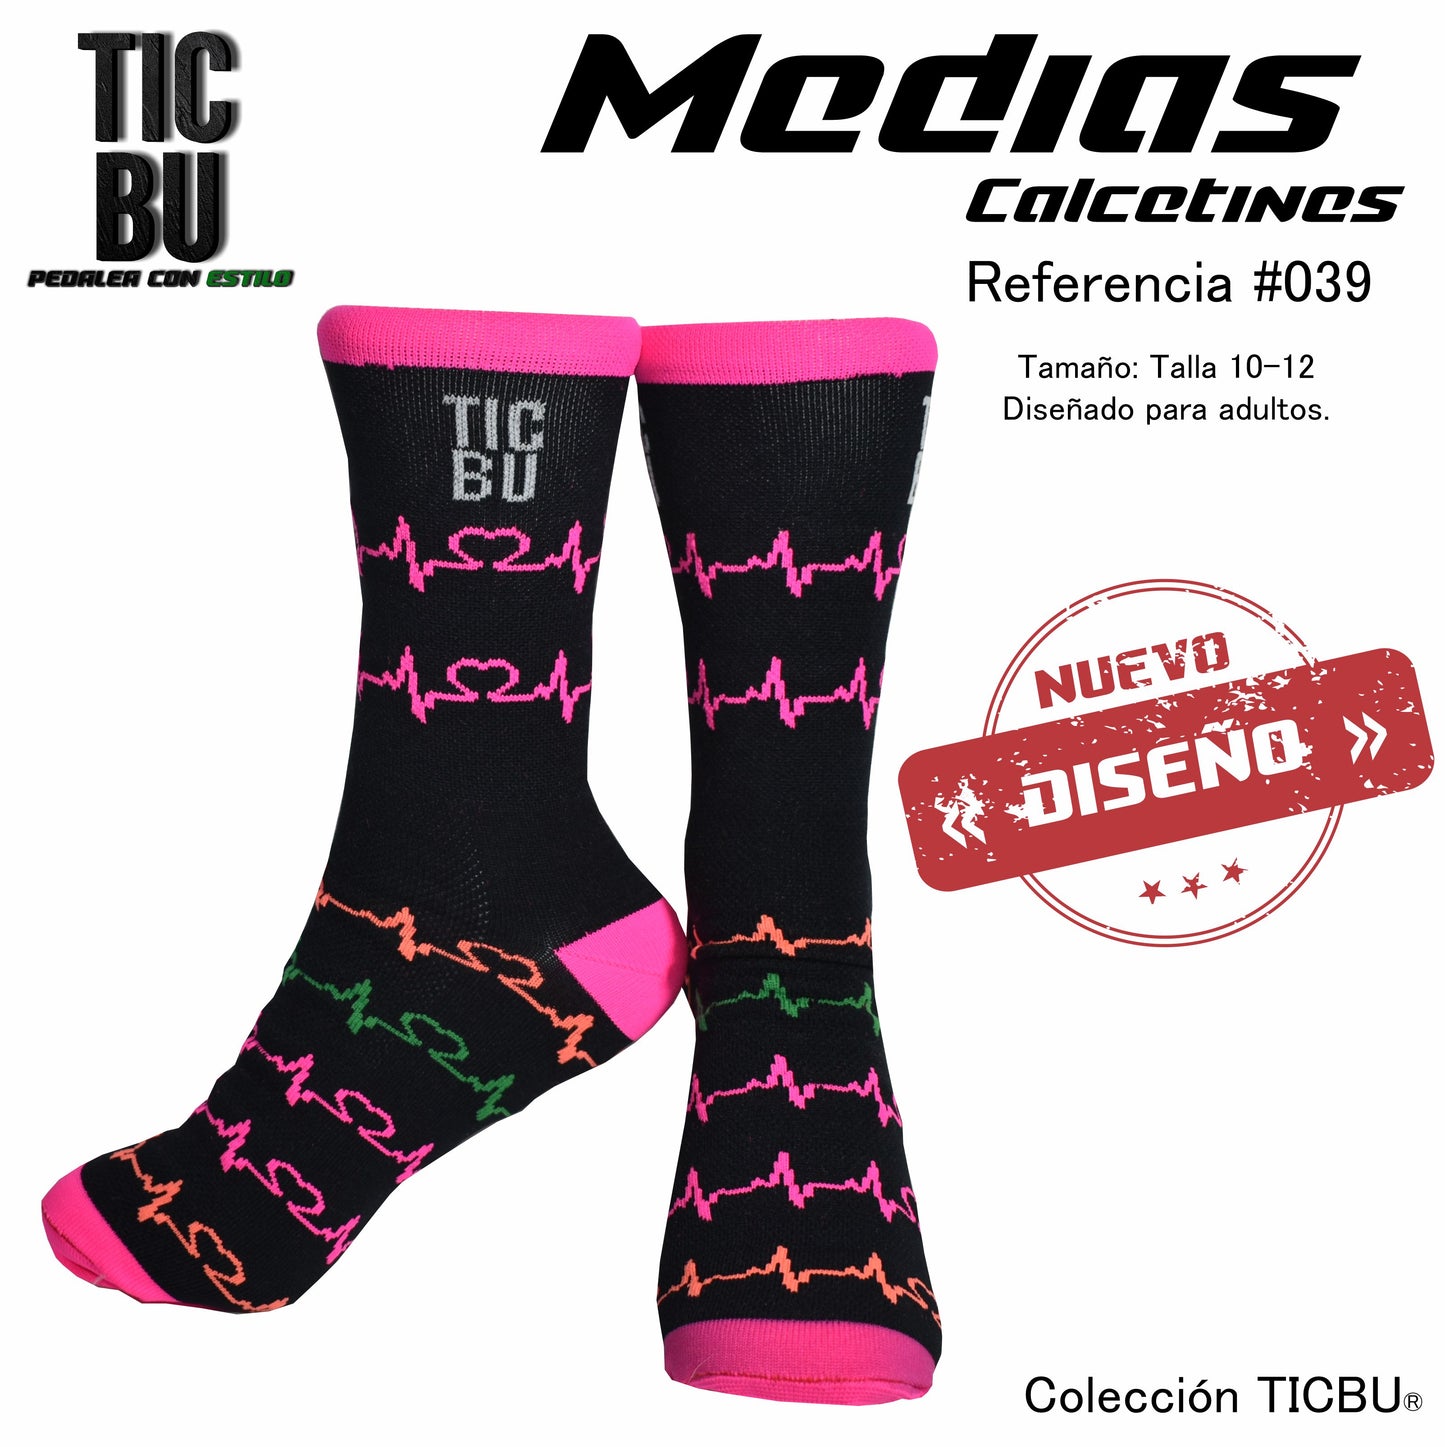 TICBU socks Ref 039